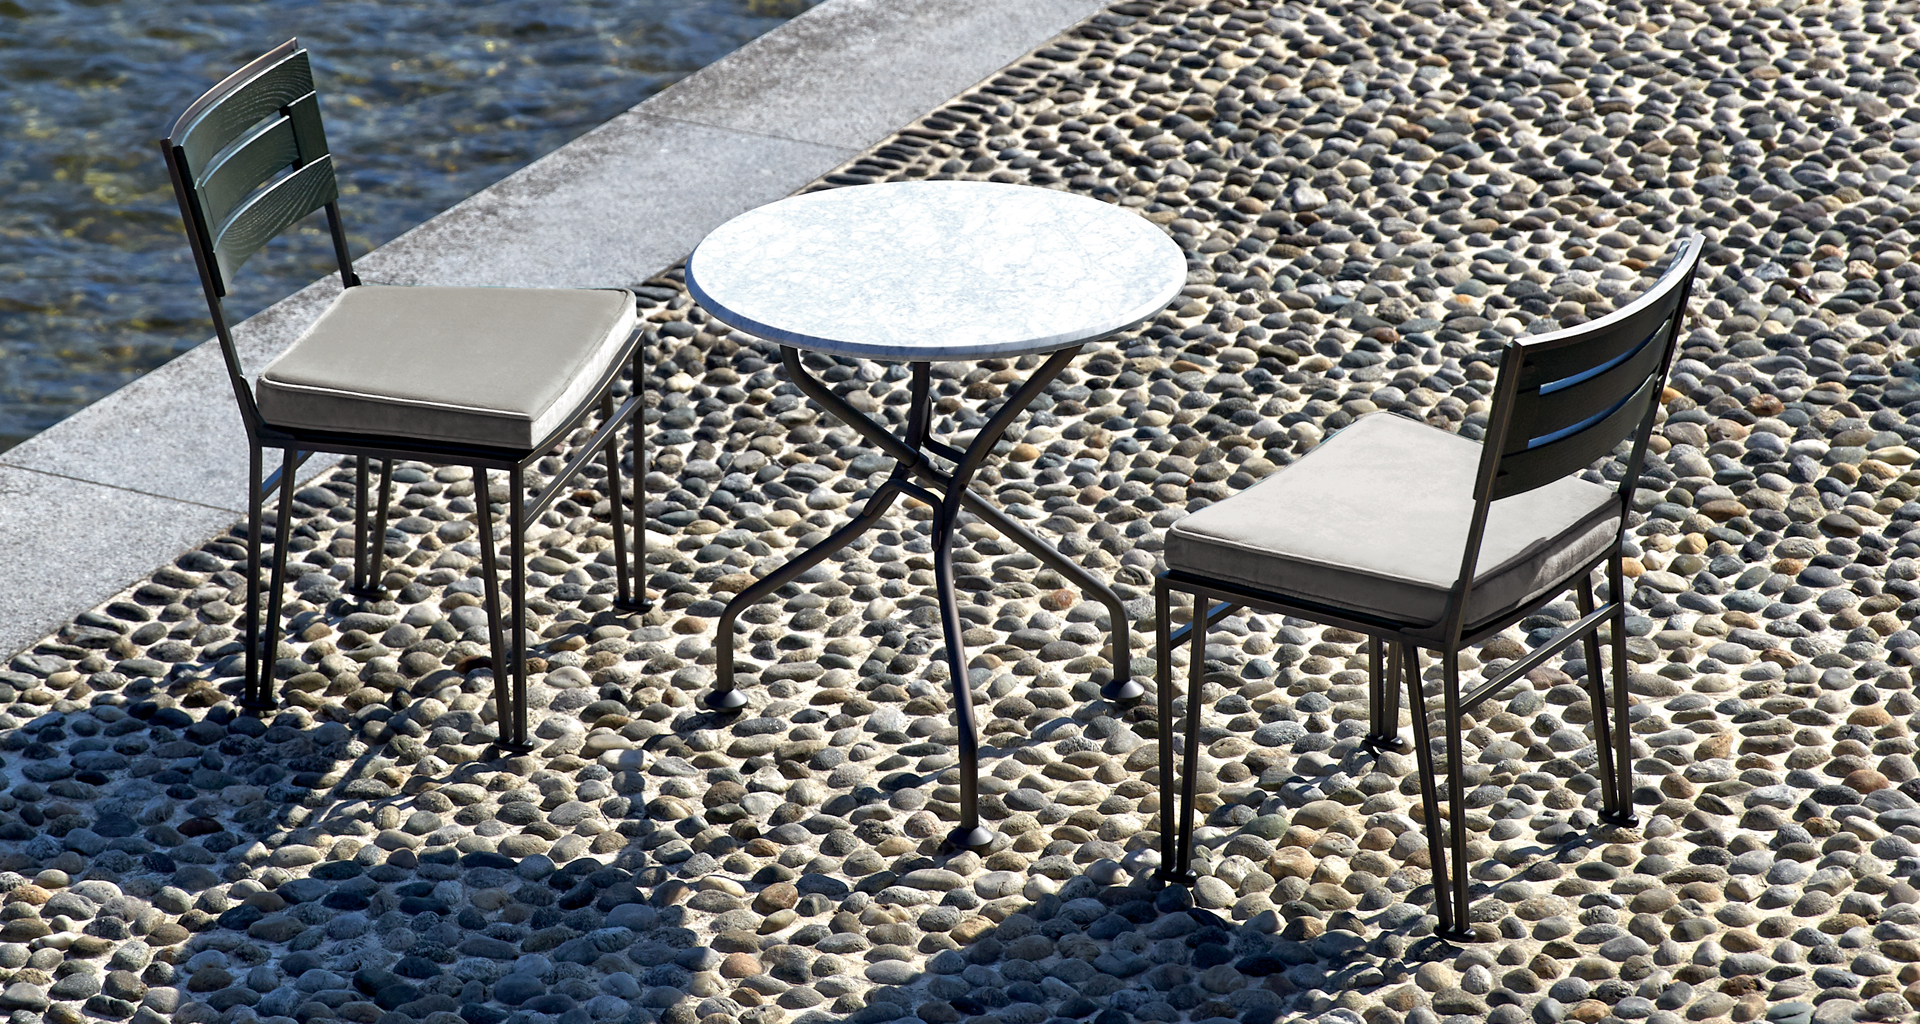 Cernobbio is an outdoor bronze chair from Promemoria's outdoor calatague | Promemoria